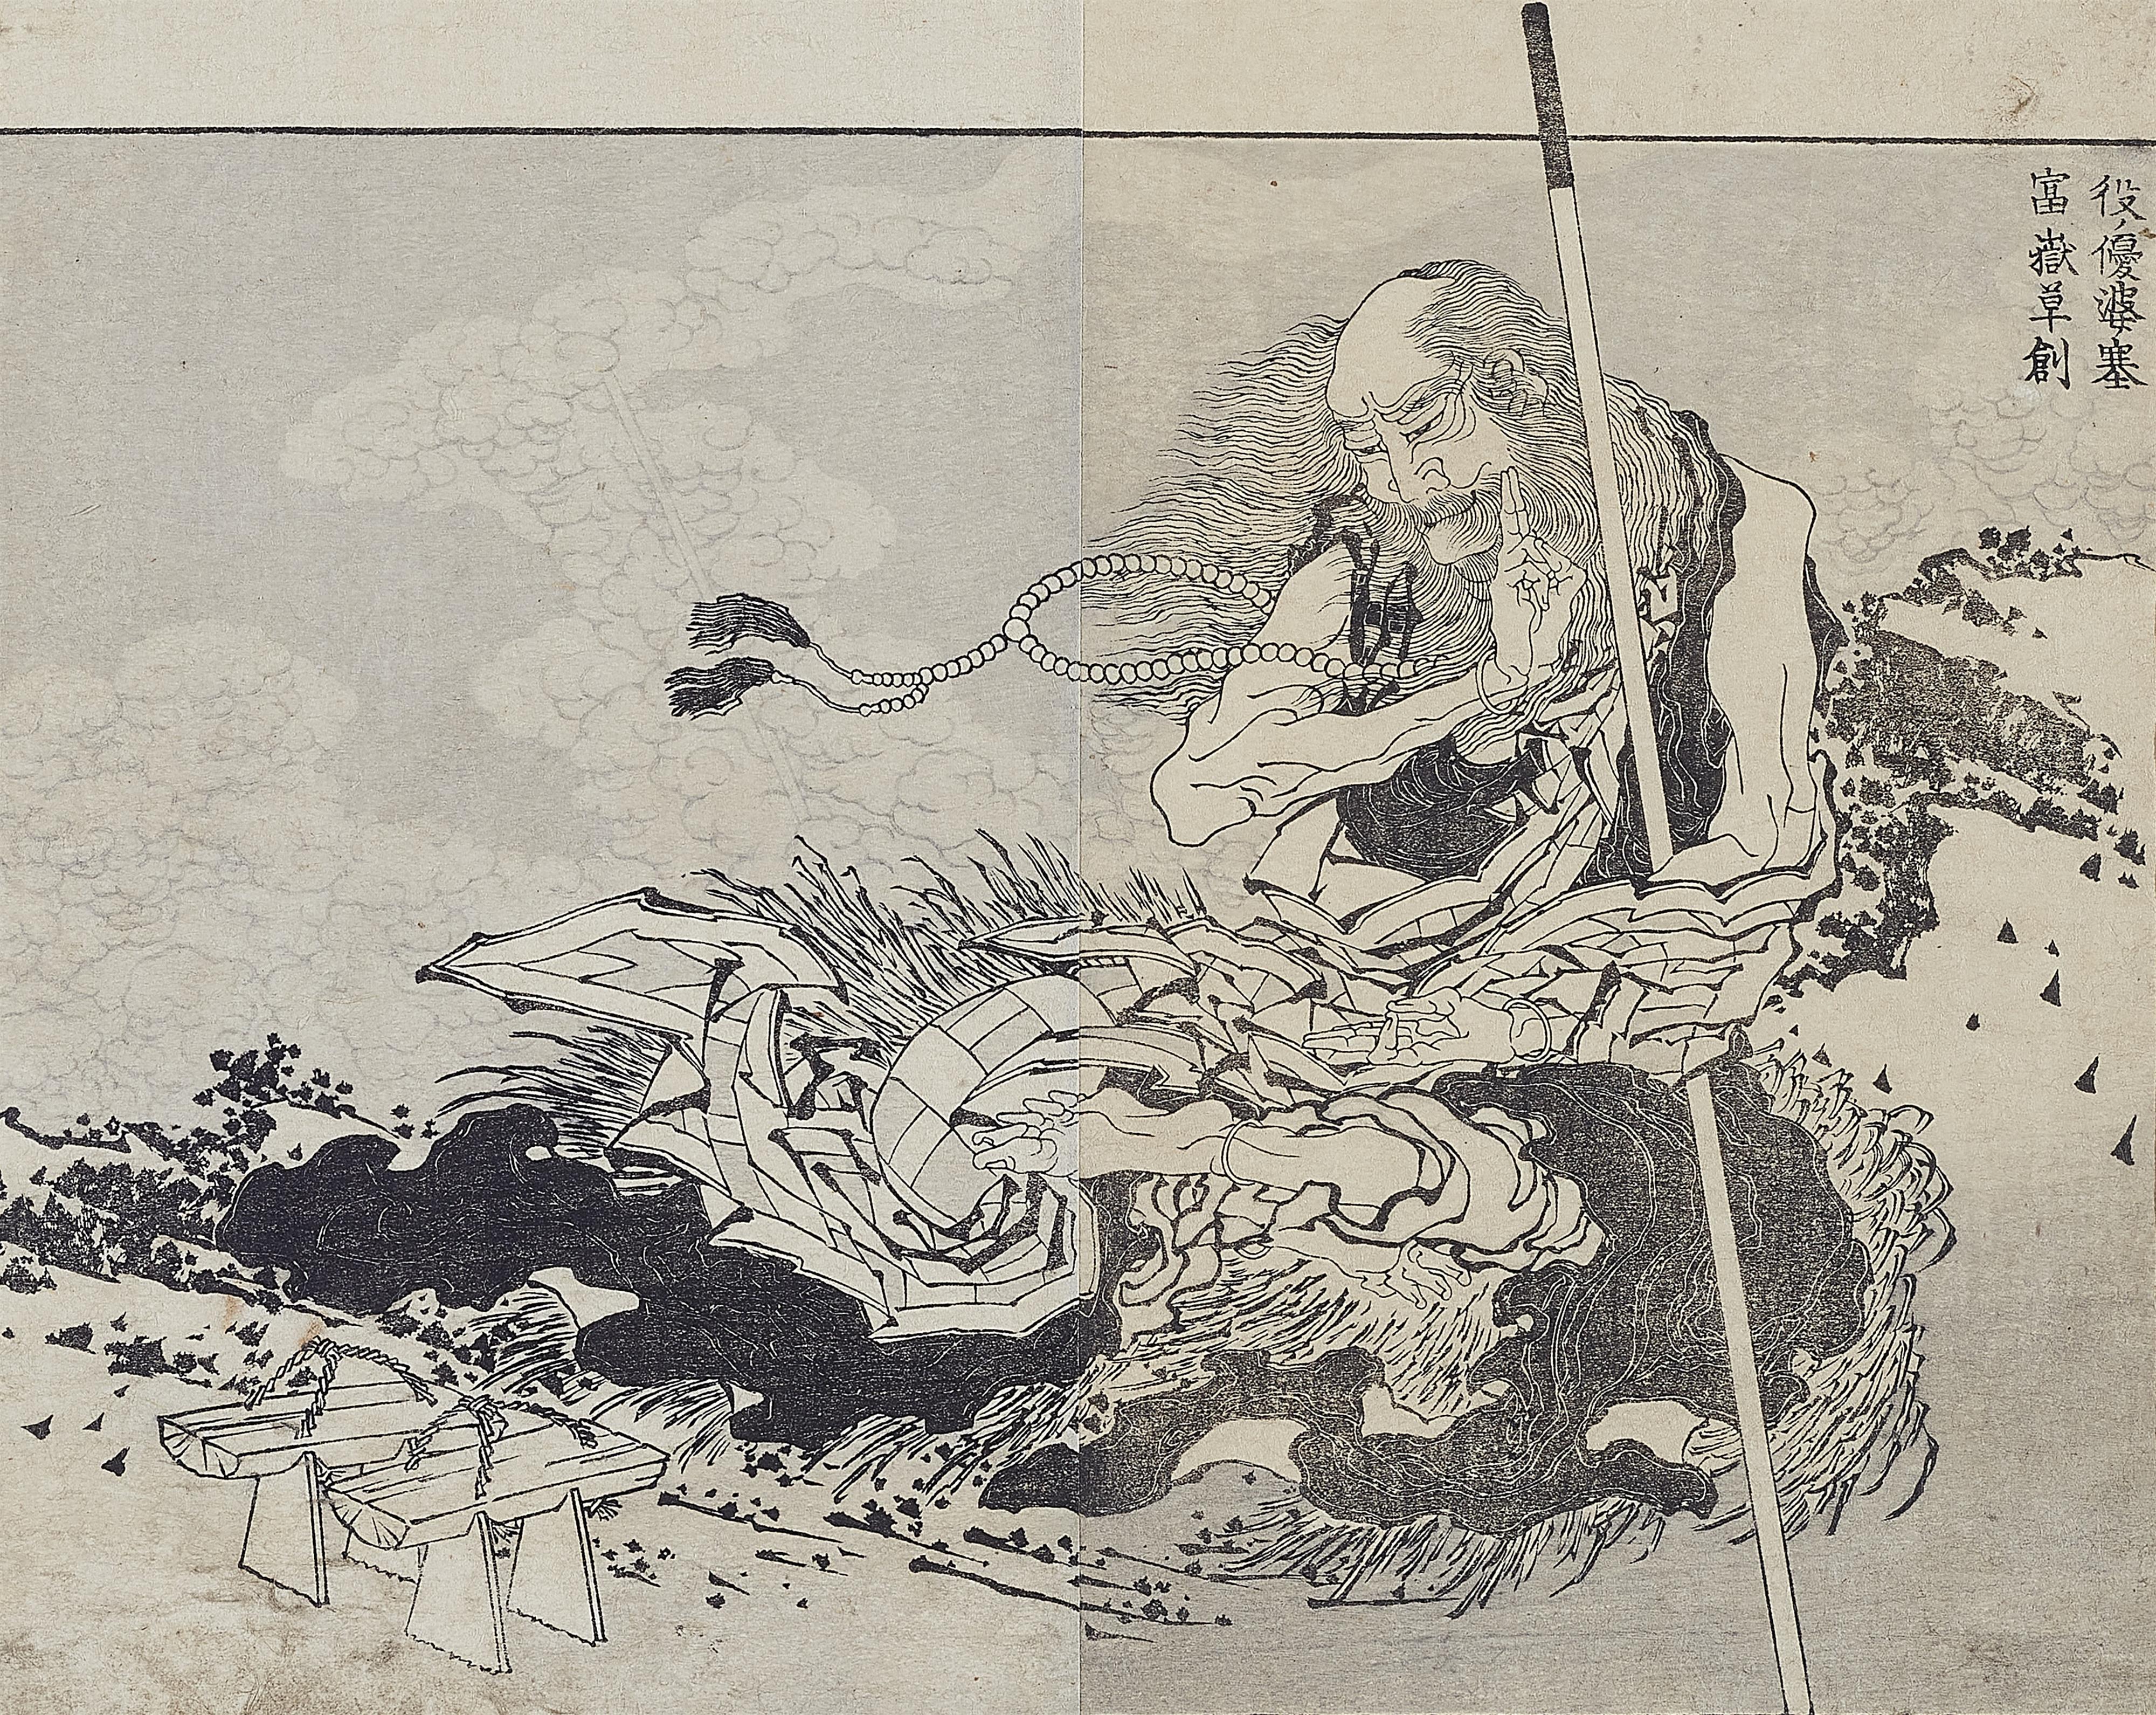 Katsushika Hokusai - Black and white illustrations from the album Fugaku hyakkei - image-16